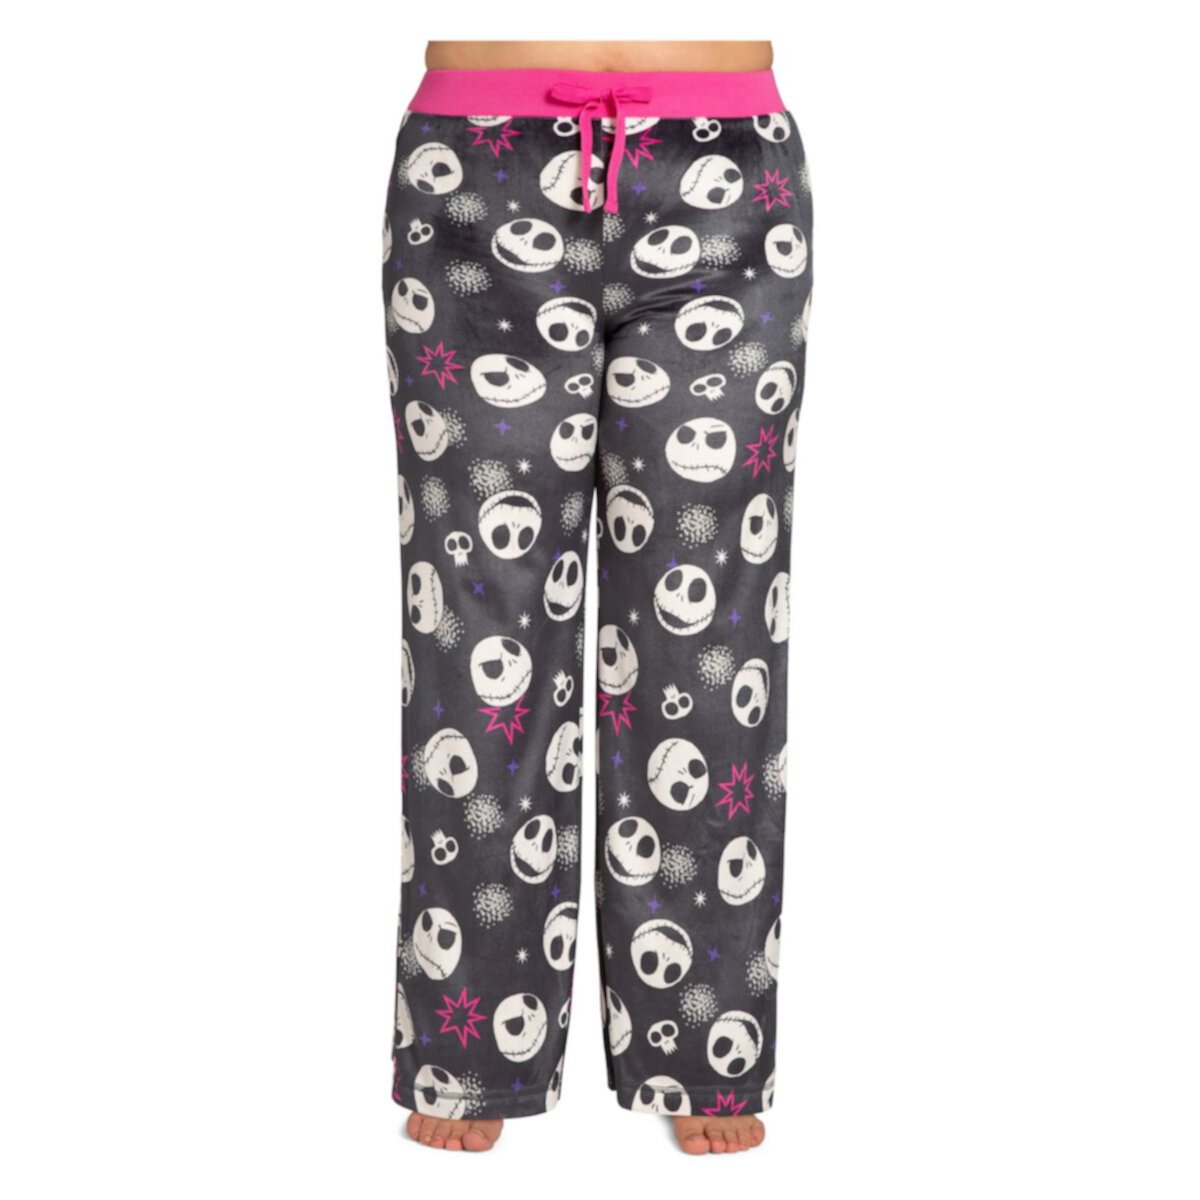 Plus Size The Nightmare Before Christmas Fleece Pajama Pants Licensed Character